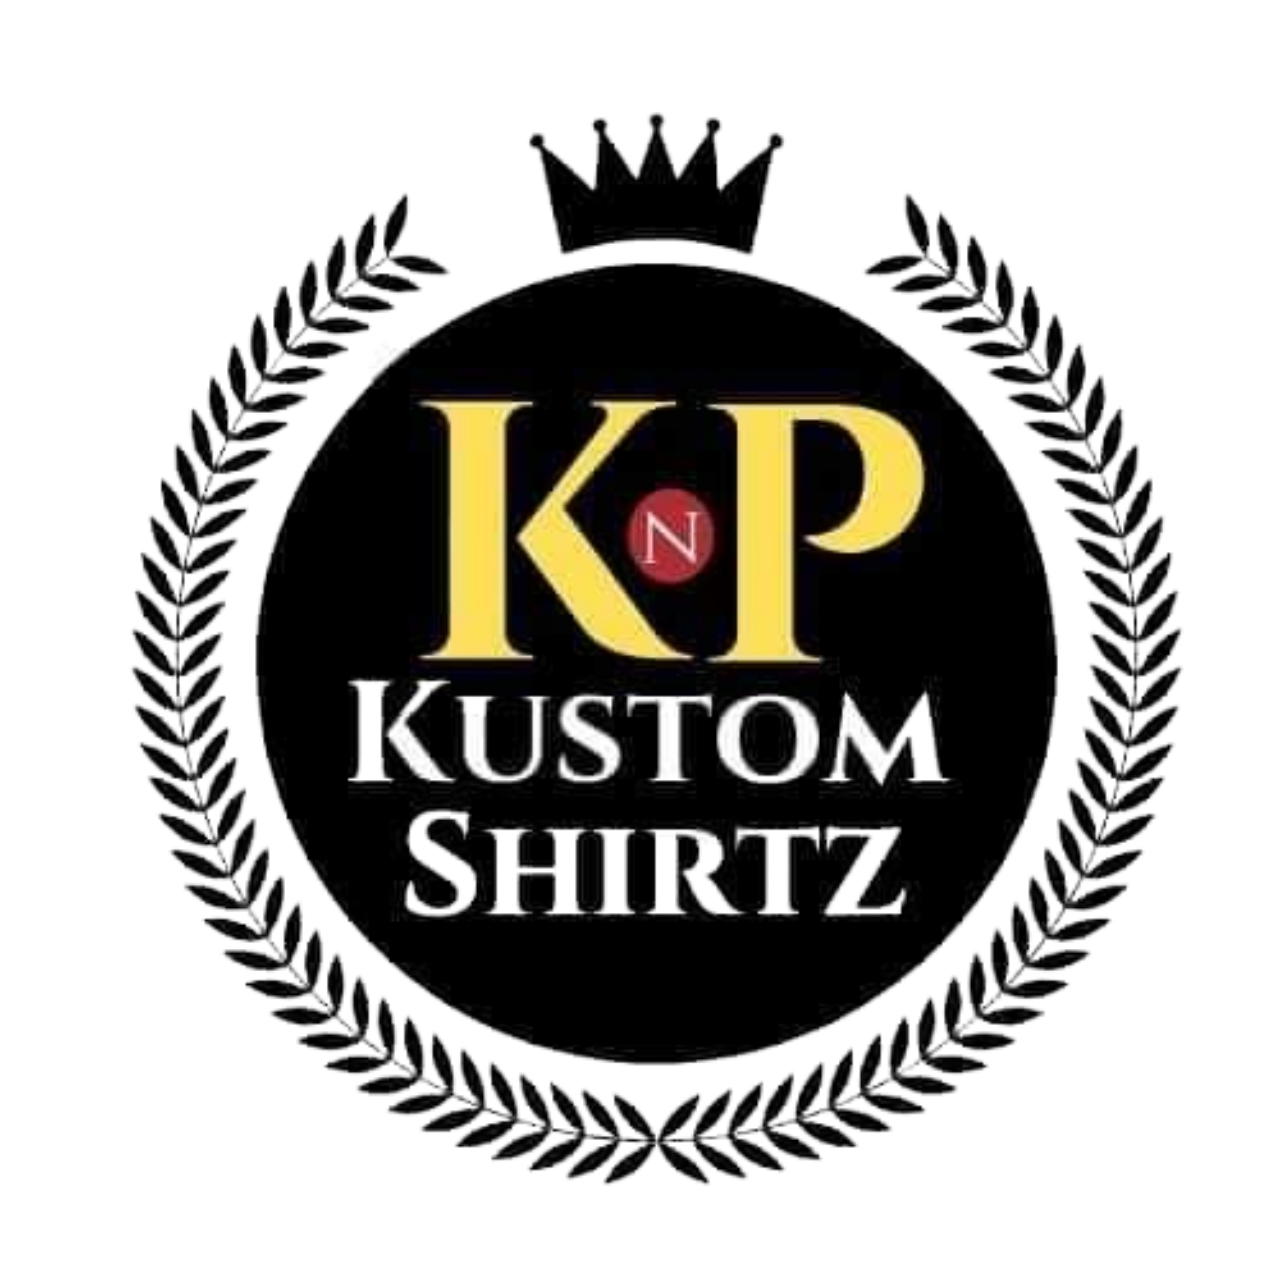 KnP Kustom Shirtz's web page